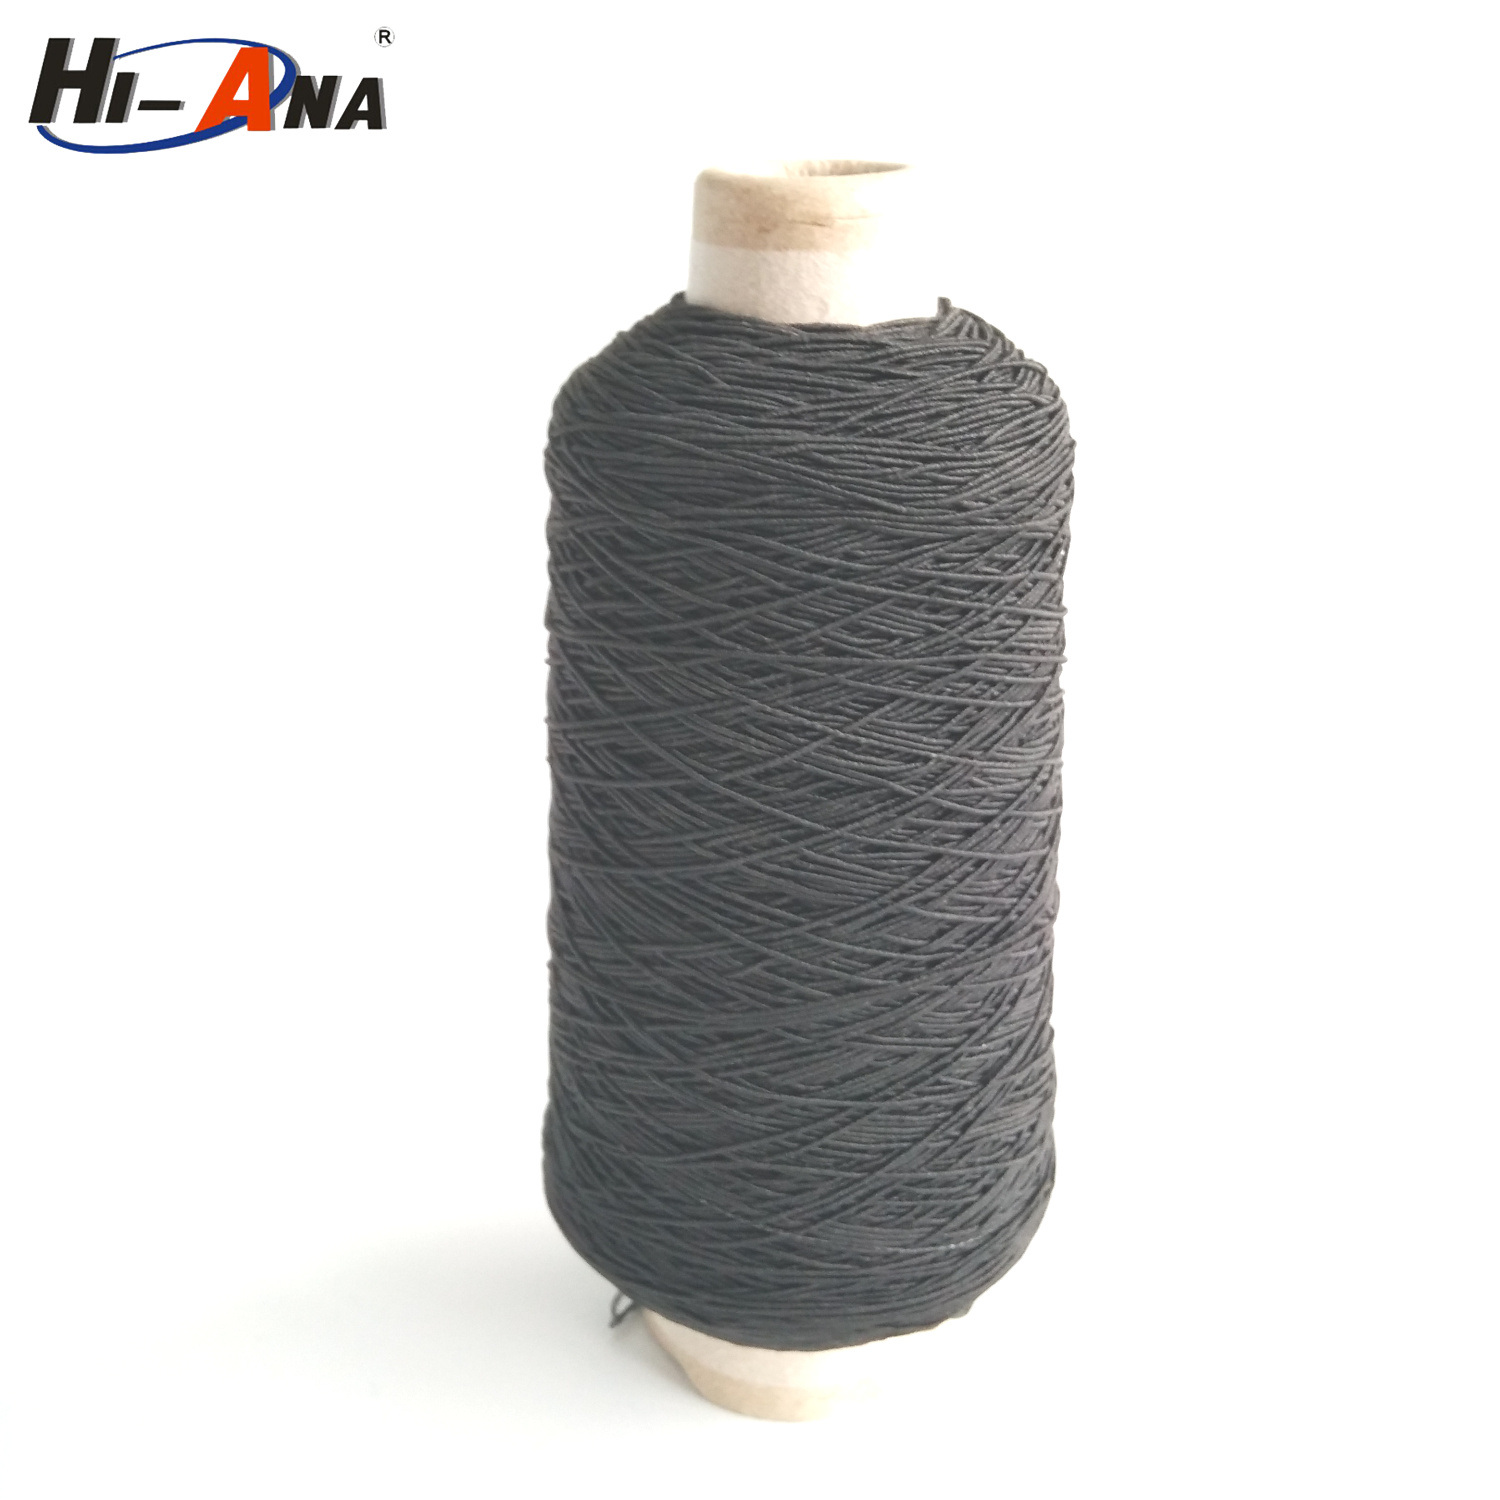 Hi-Ana Thread1 Best Hot Selling Cheaper Elastic Thread for Knitting